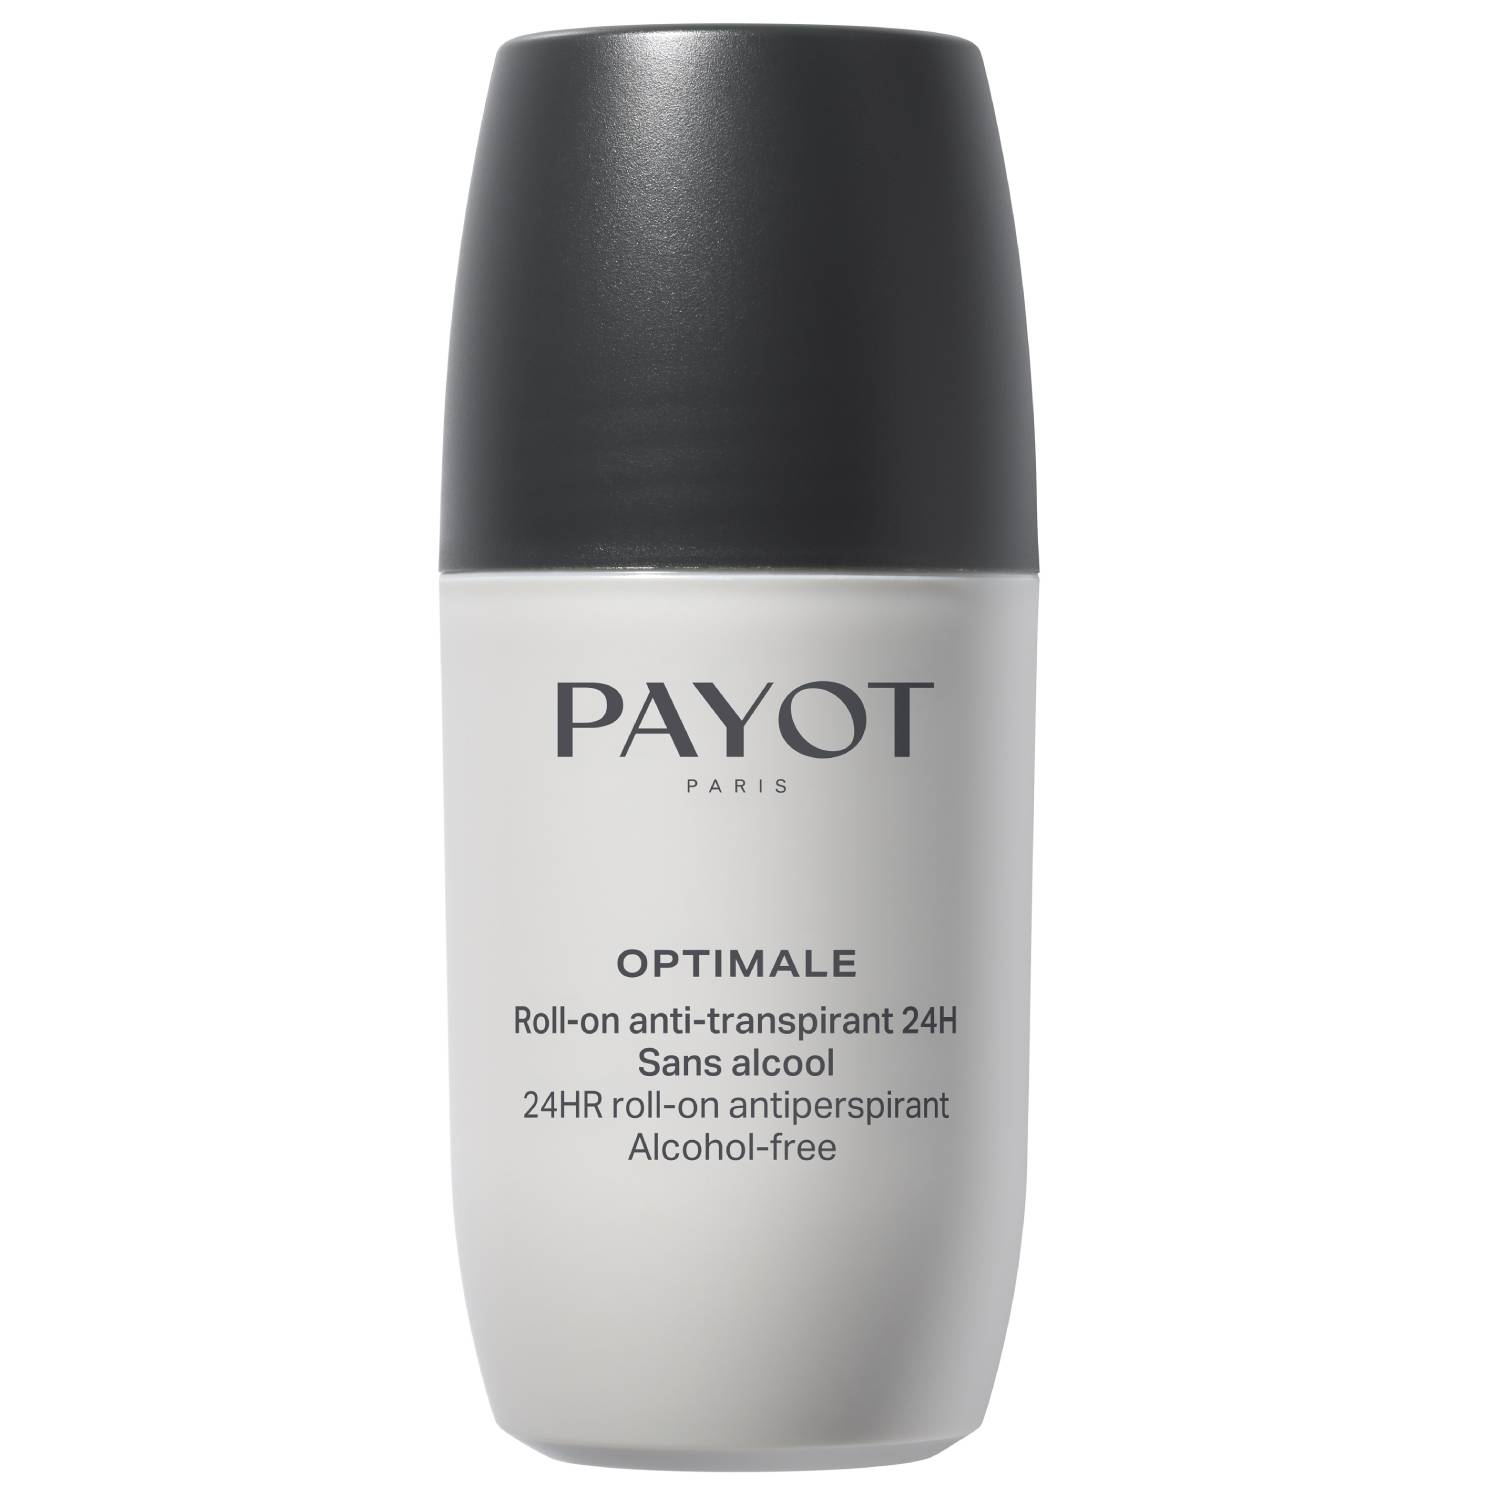 Payot Роликовый дезодорант-антиперспирант 24 часа для мужчин, 75 мл (Payot, Optimale)